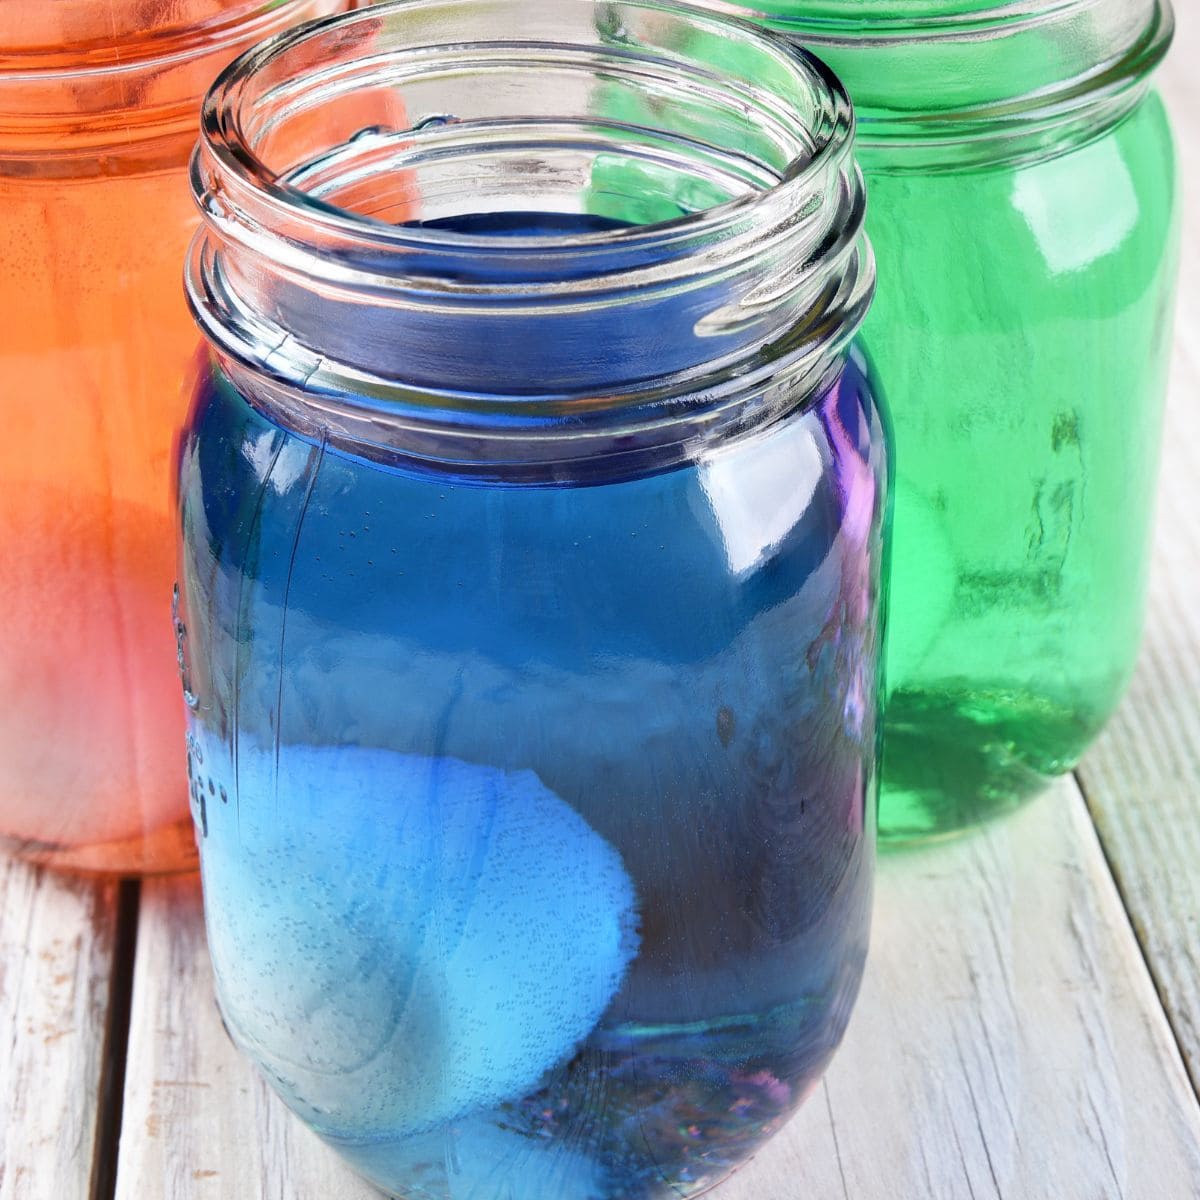 Mason jars with colored Koolaid in them.